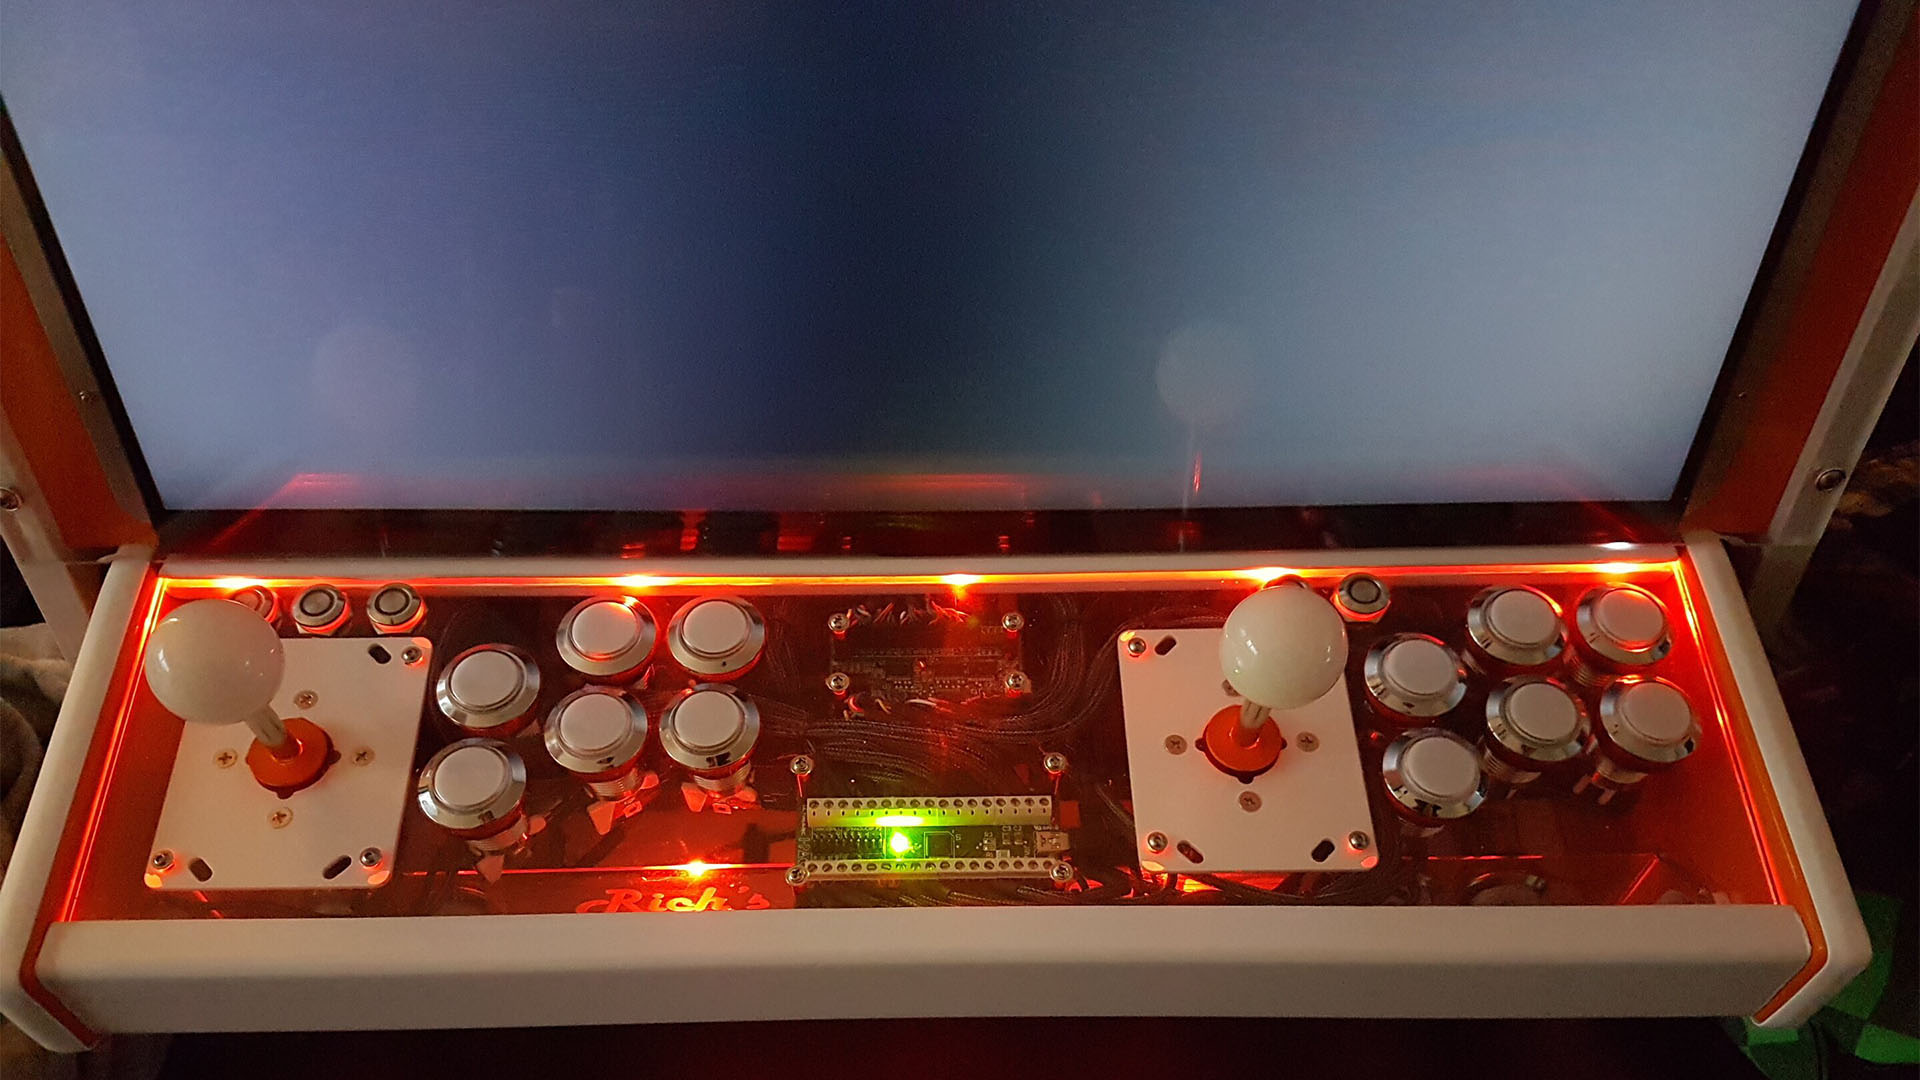 Retro arcade gaming custom PC build: Retrocade controllers and lights